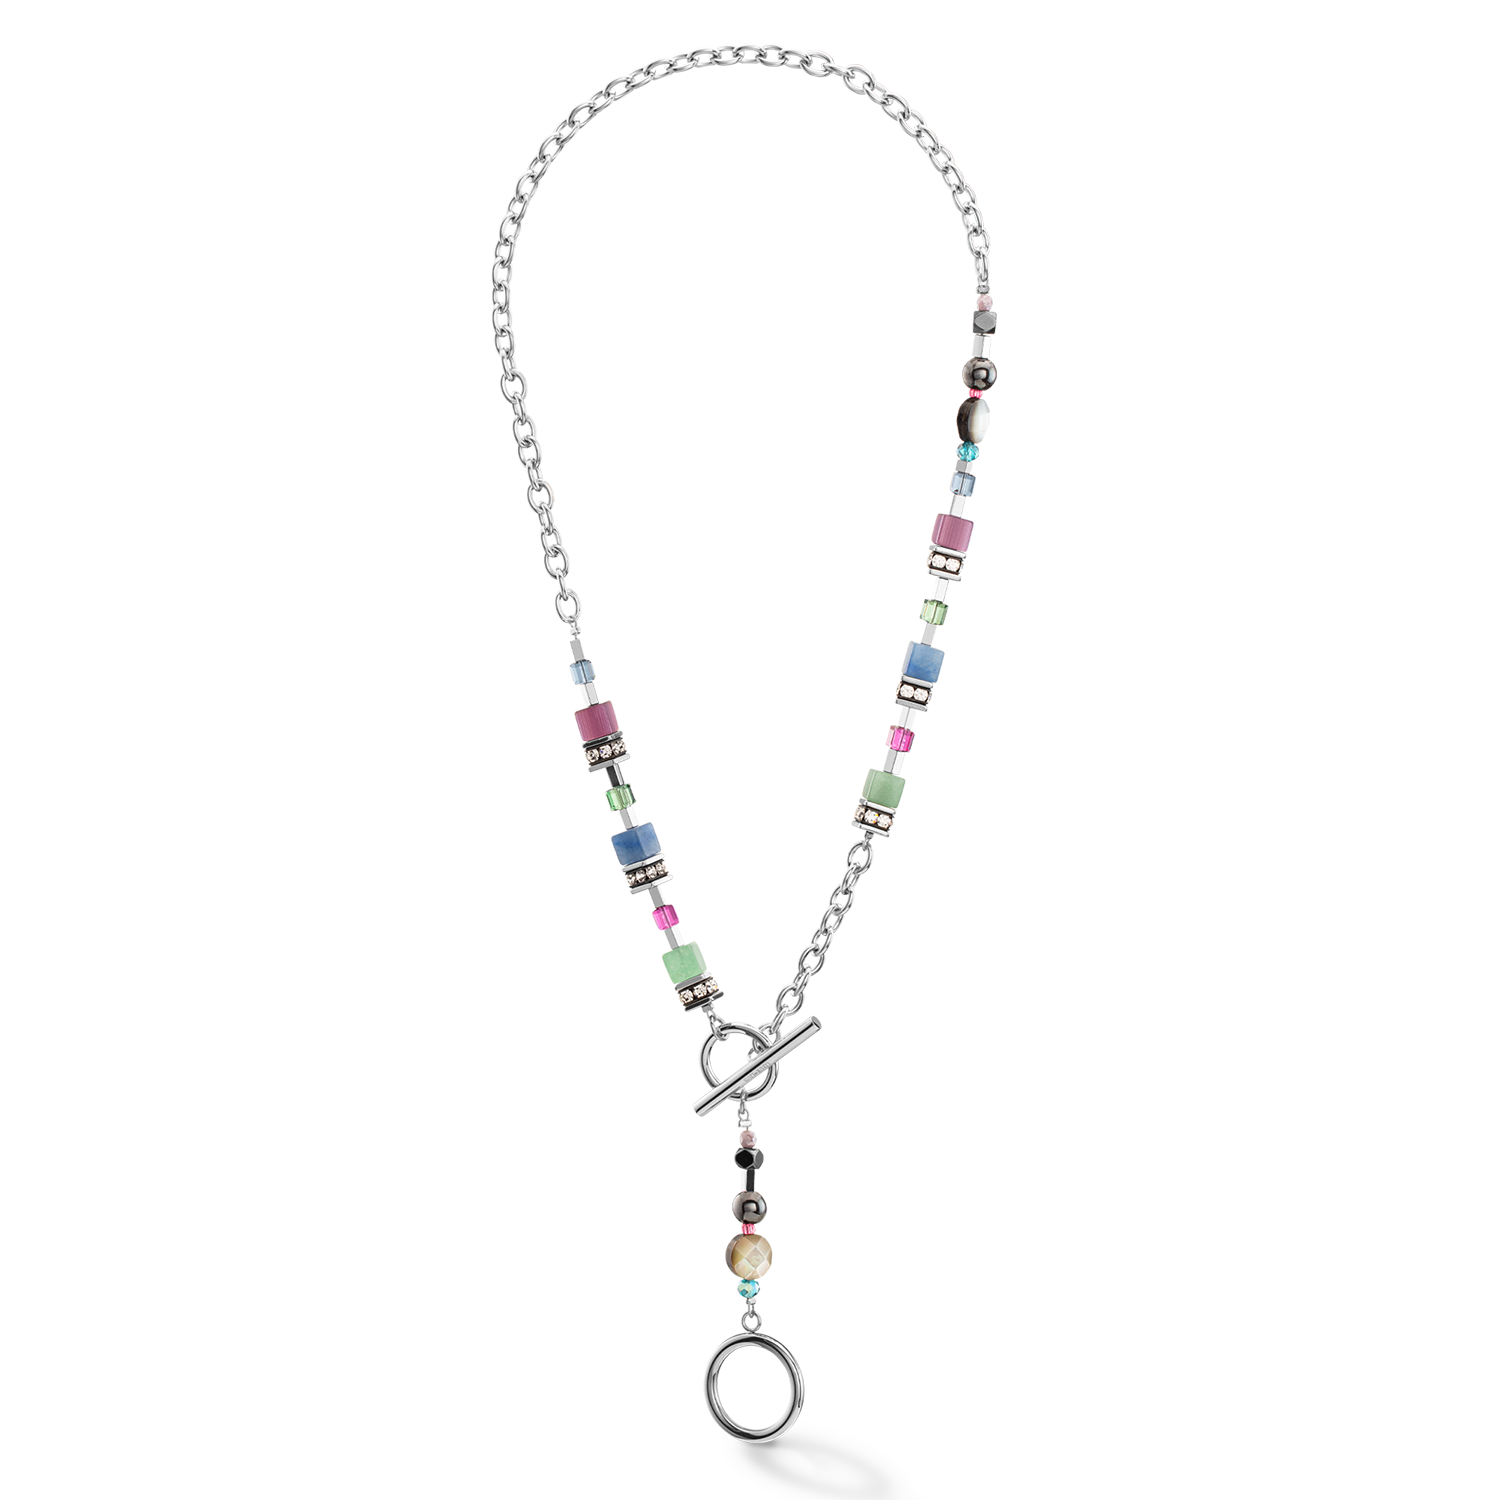 GeoCUBE® Fusion necklace Multicolour Gemstone